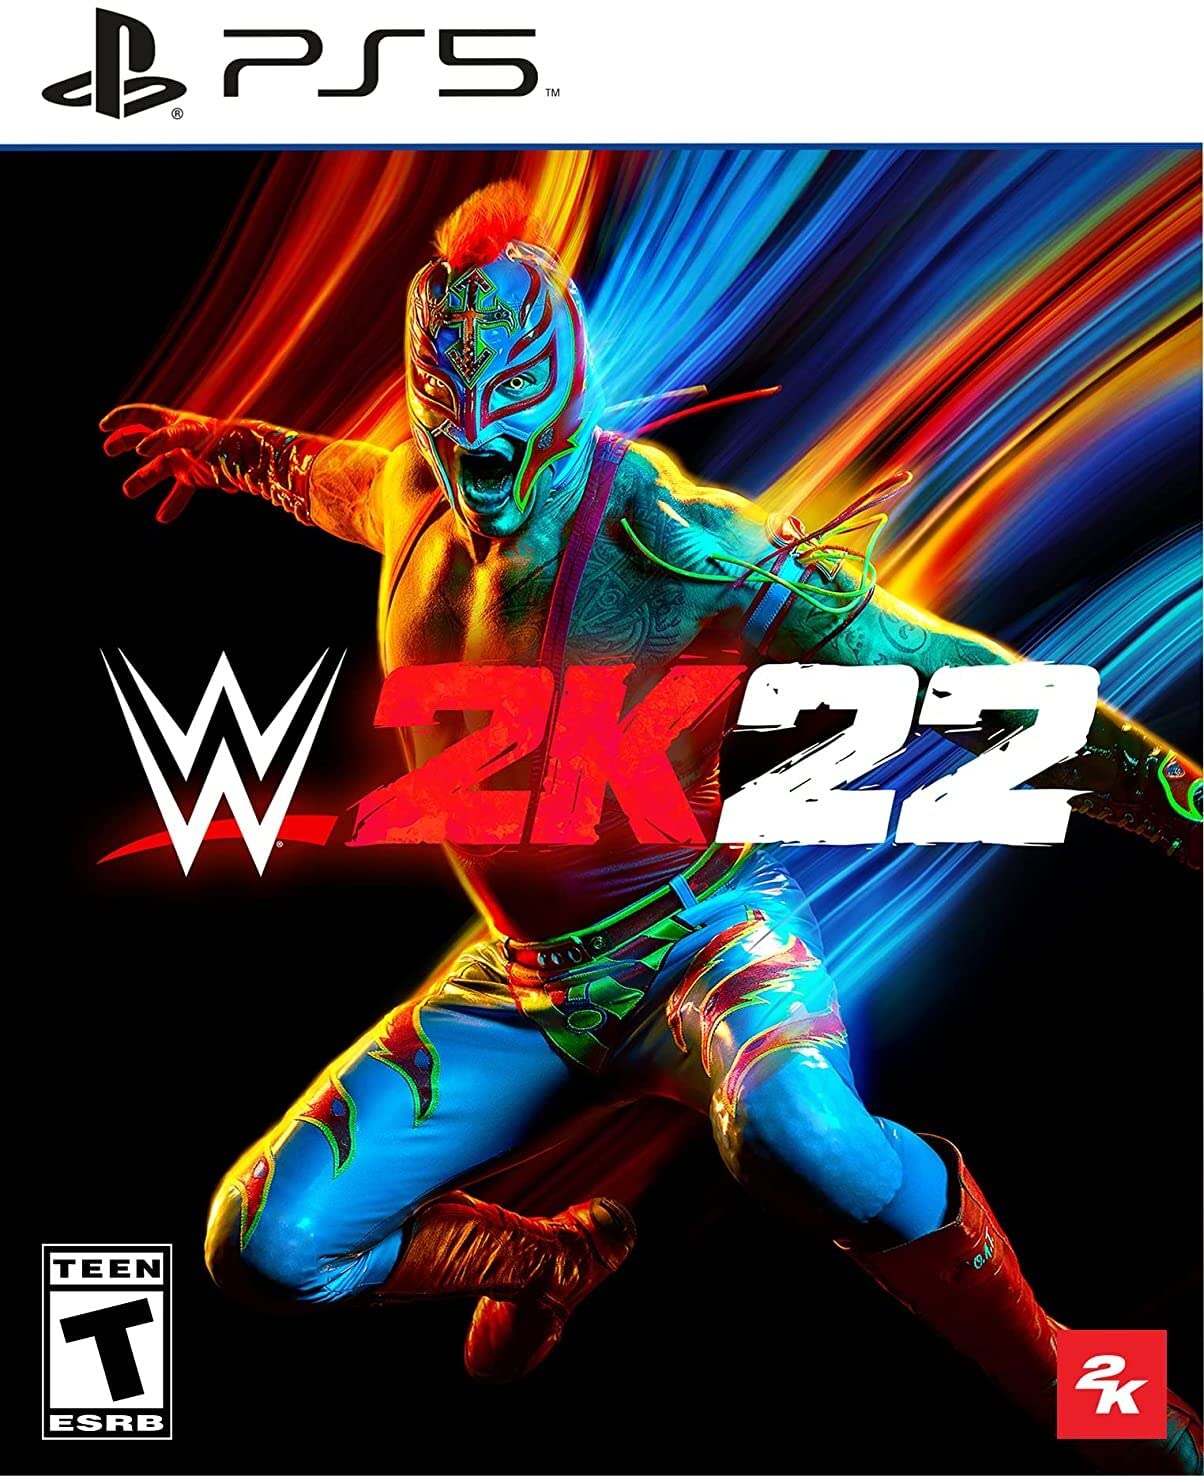 WWE 2K22 - PlayStation 5 - image 1 of 9